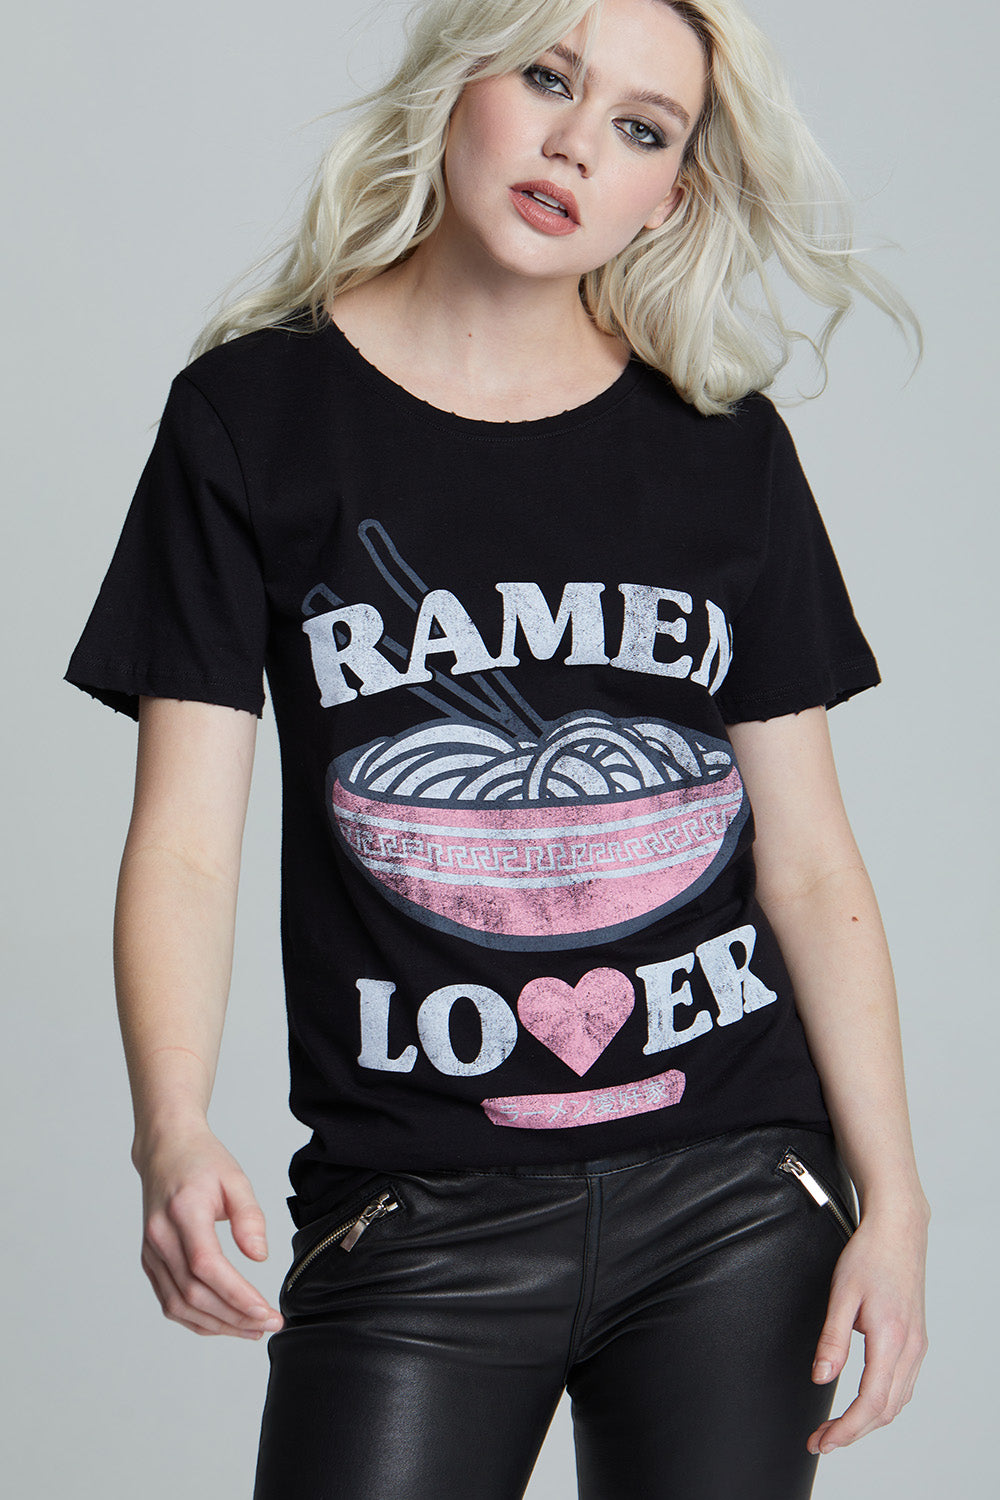 Ramen Lover Members Only Tee